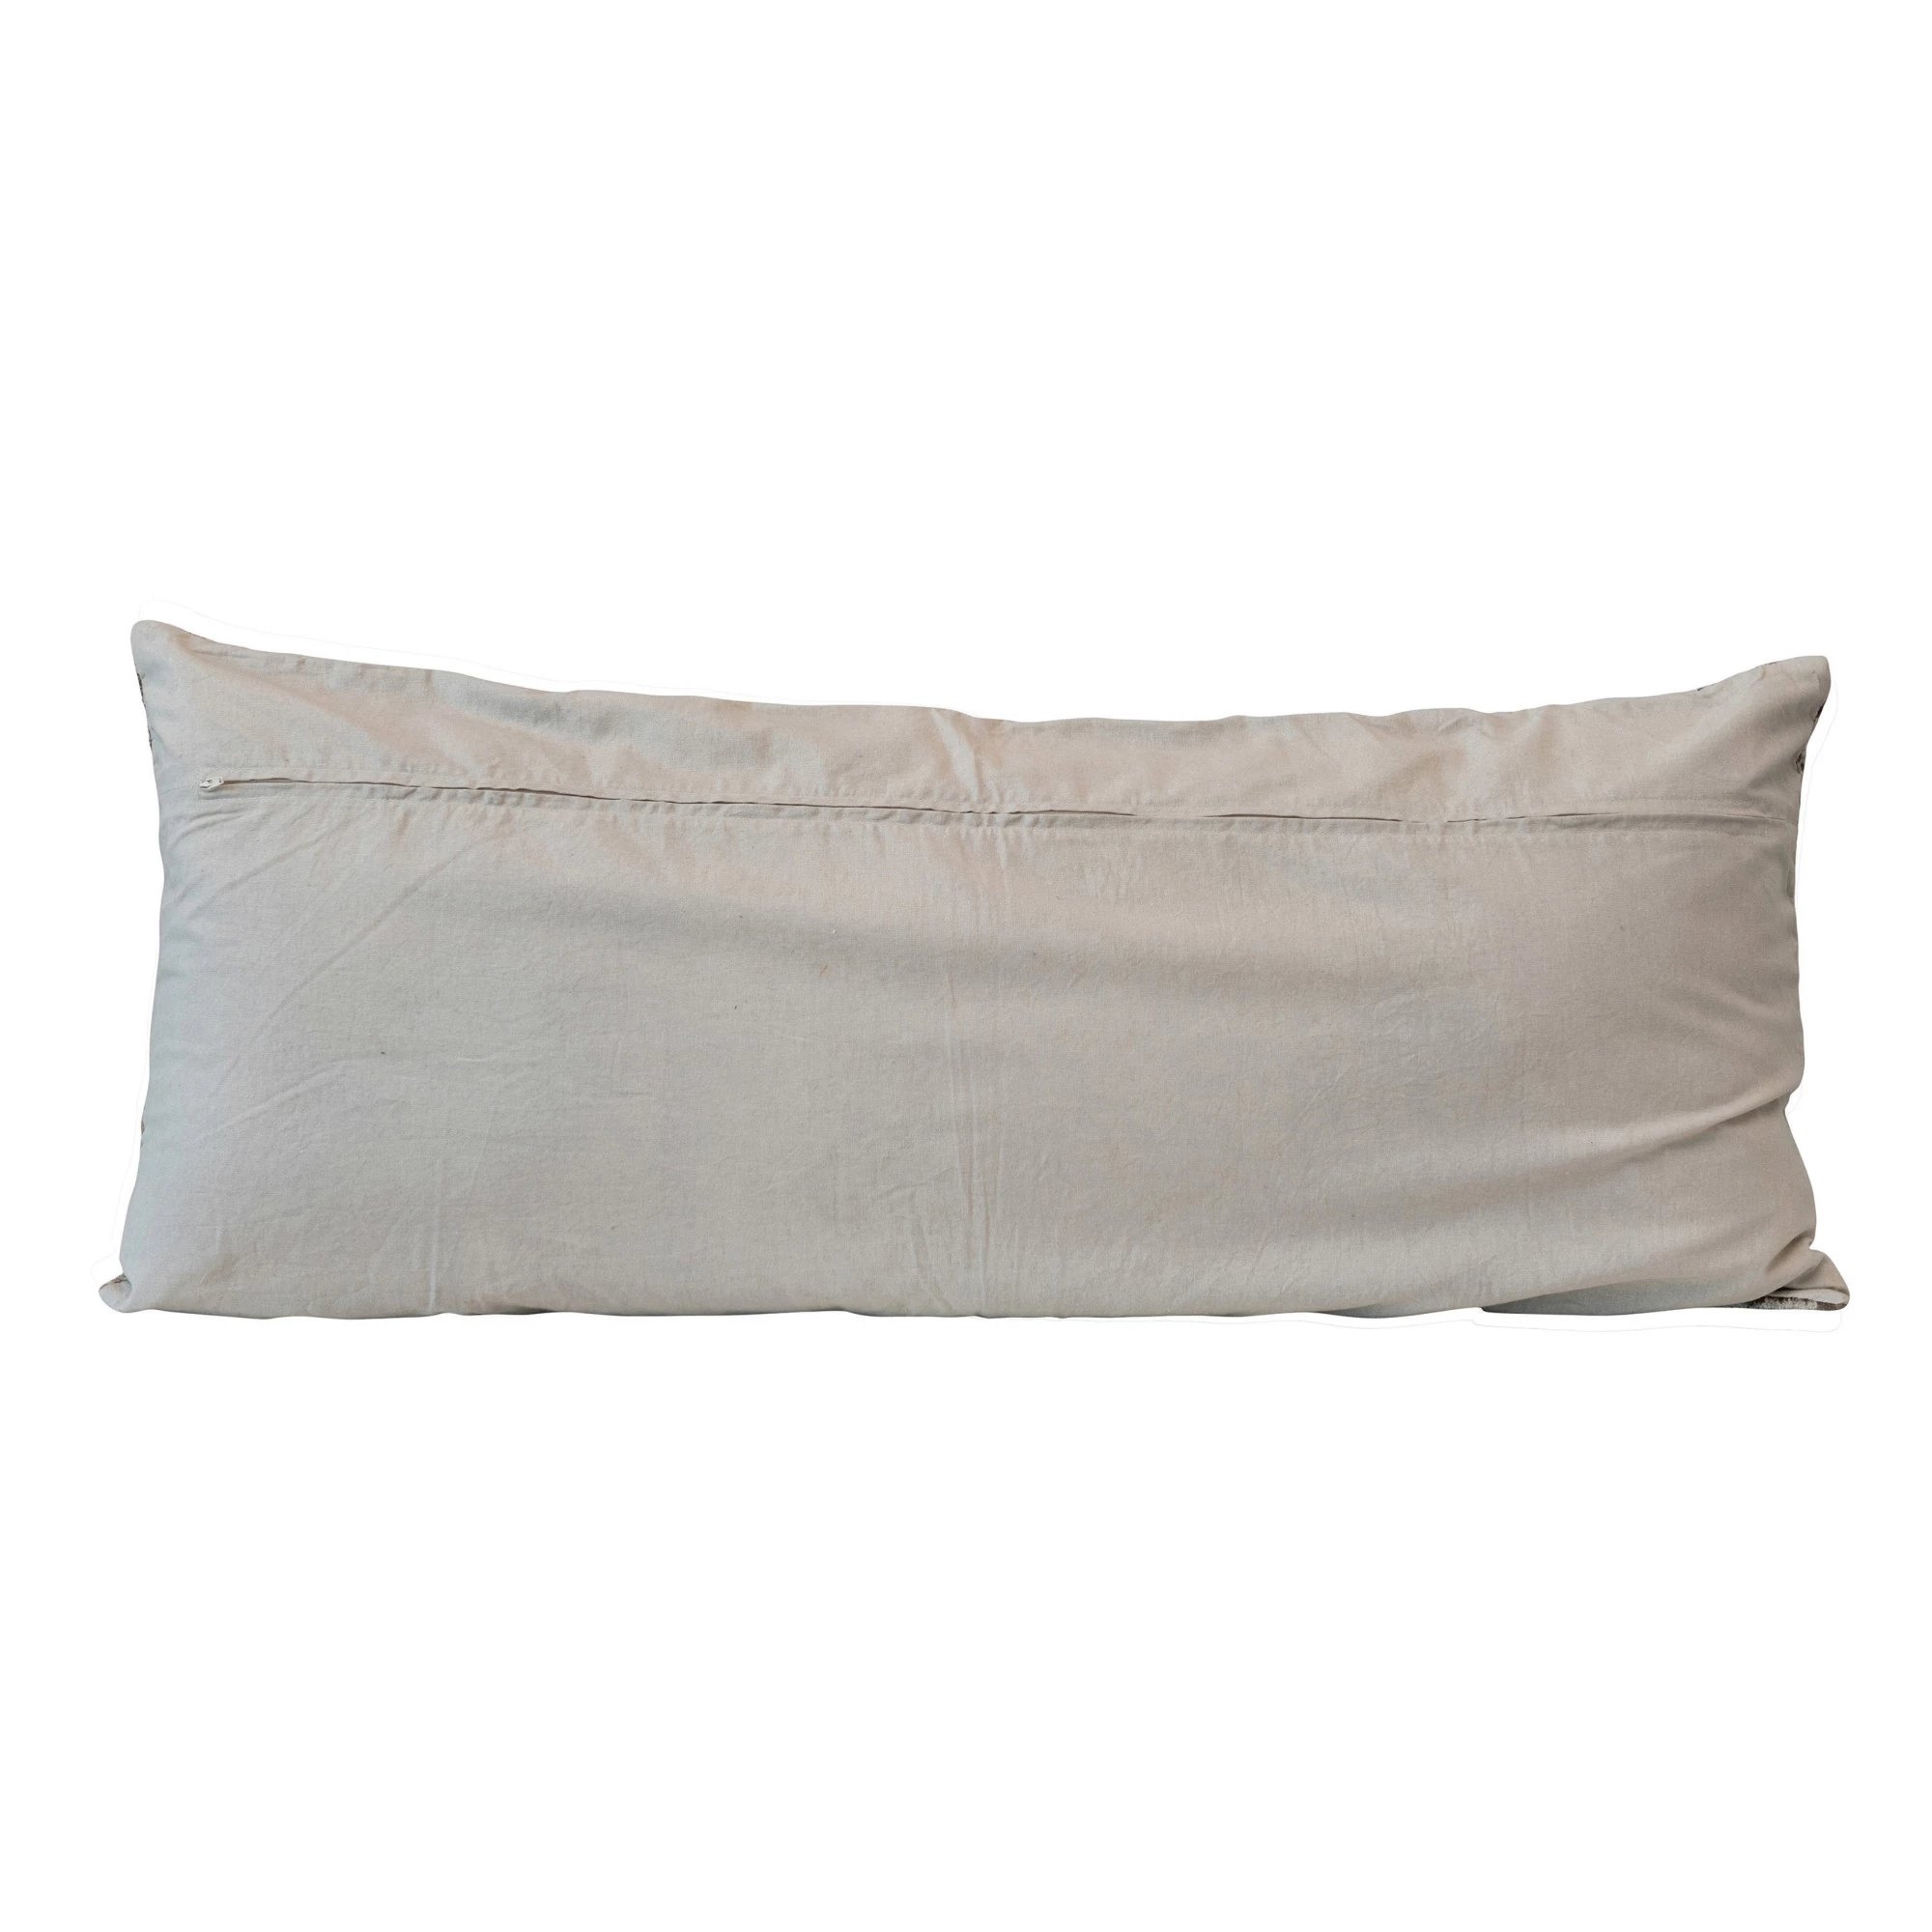 Chenille Jacquard Lumbar Pillow, Brown & Cream, 36" x 16" - Image 1